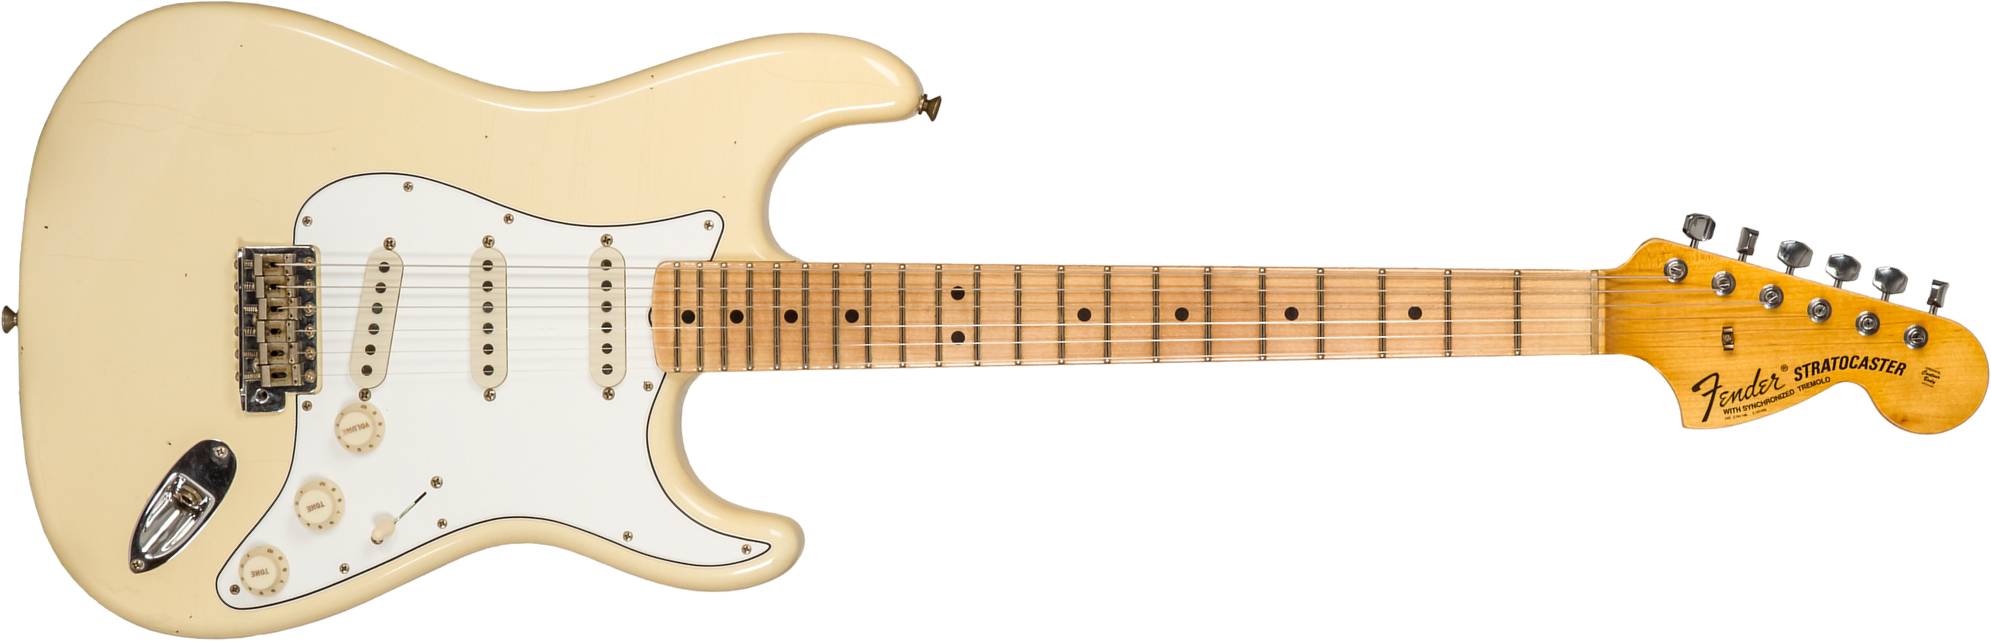 Fender Custom Shop Strat 1969 3s Trem Mn #cz576216 - Journeyman Relic Aged Vintage White - E-Gitarre in Str-Form - Main picture